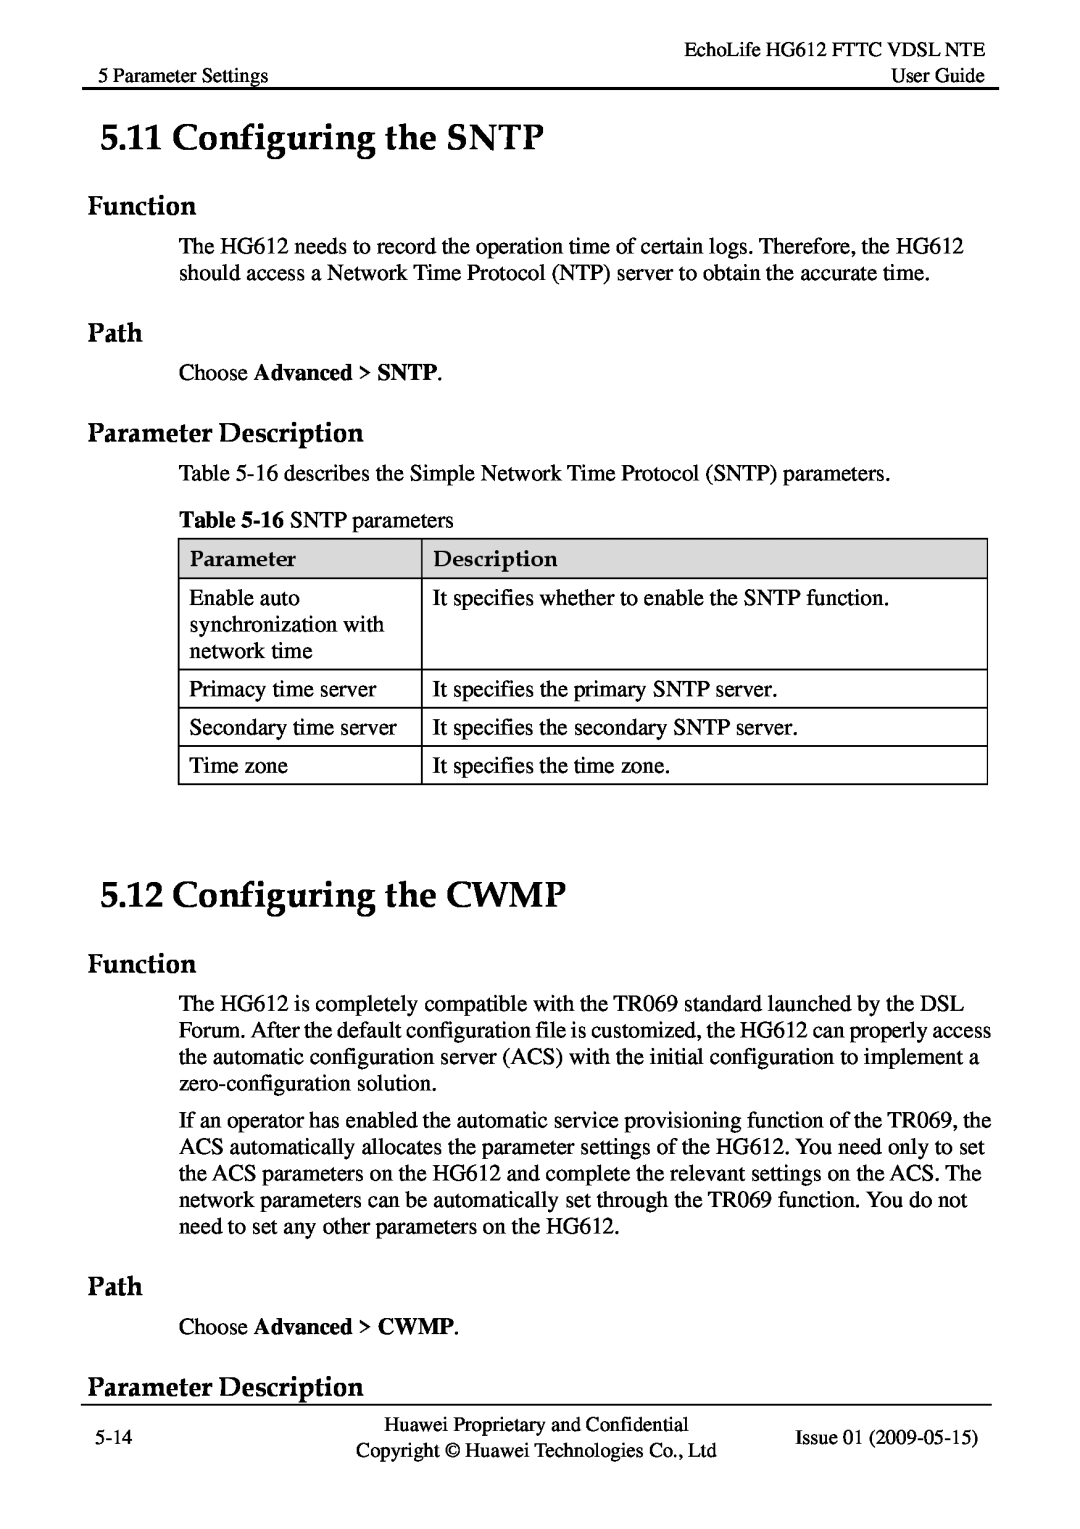 Huawei HG612FTTC VDSL NTE manual Configuring the SNTP, Configuring the CWMP, Function, Path, Parameter Description 